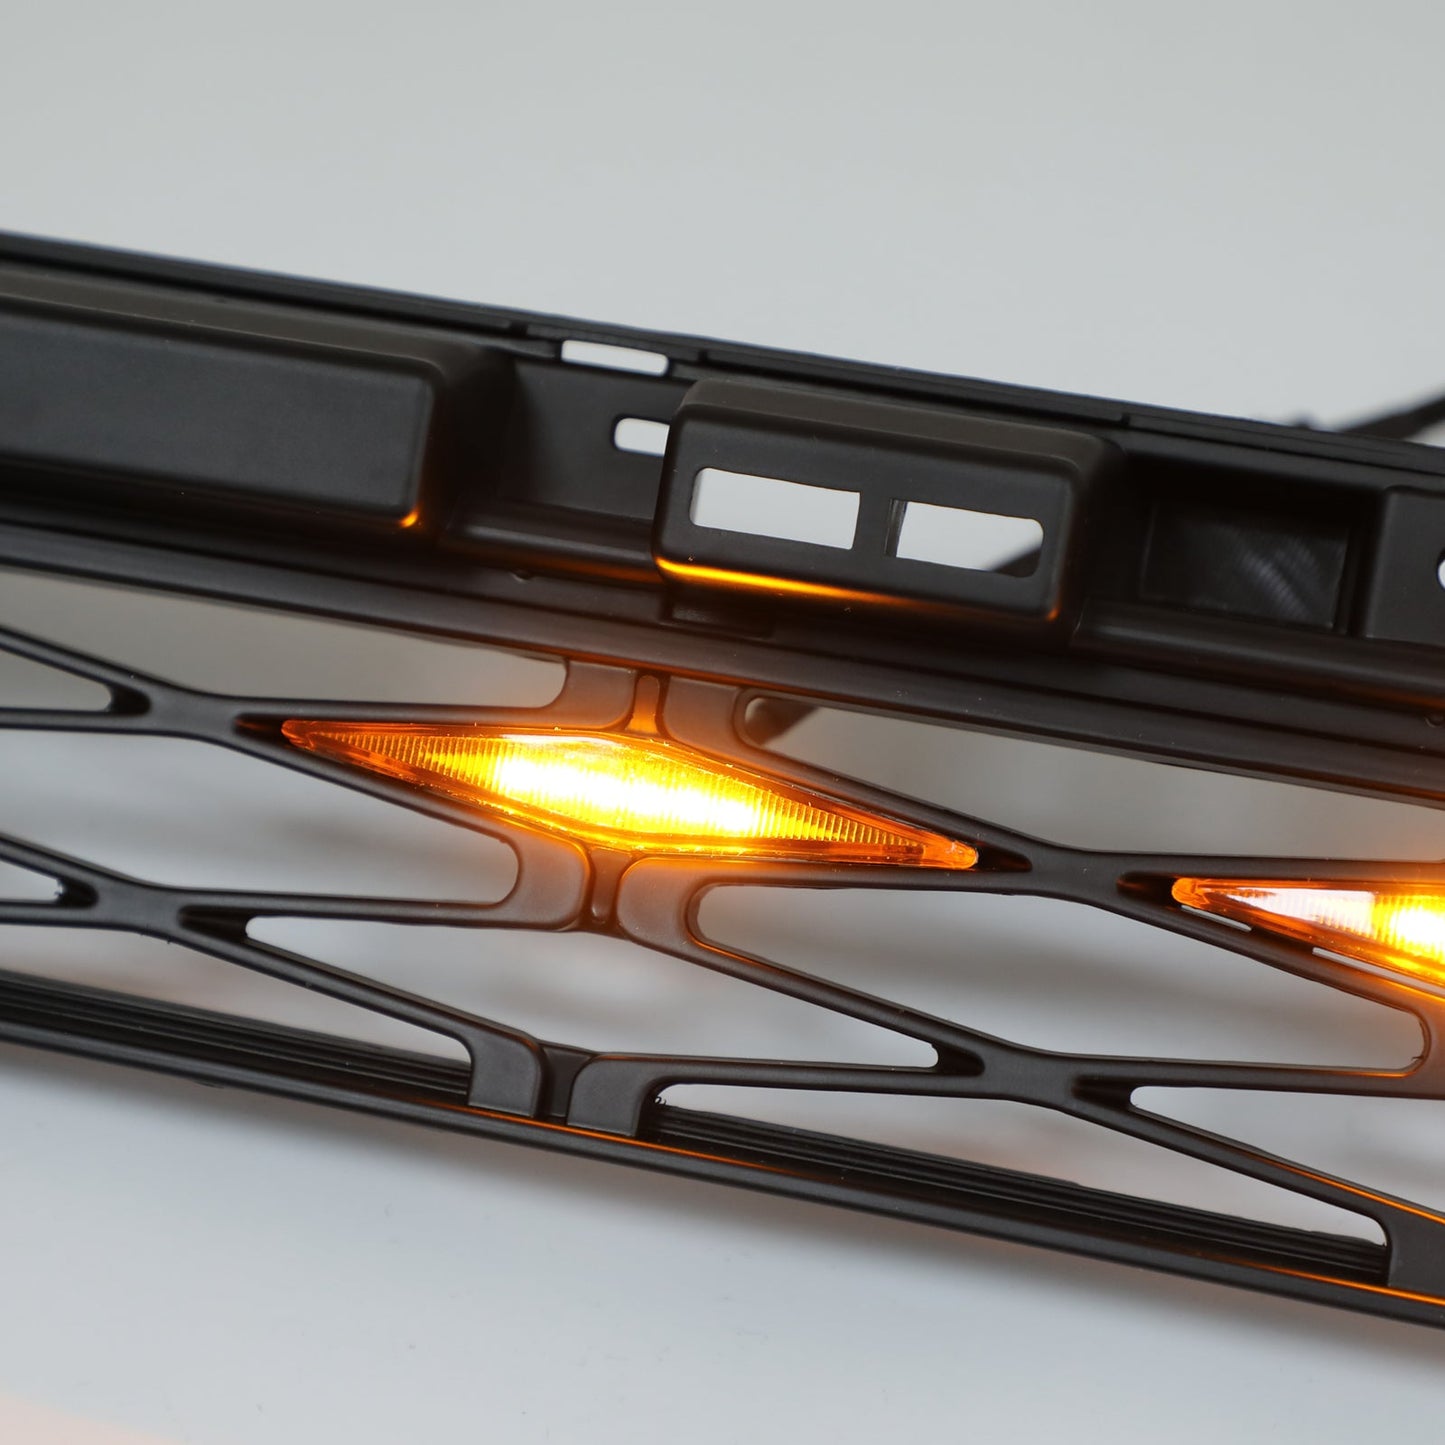 4Runner TRD Pro 2014-2019 Toyota 4PCS Plastikauto Grillgrill LED Leuchten Generisches